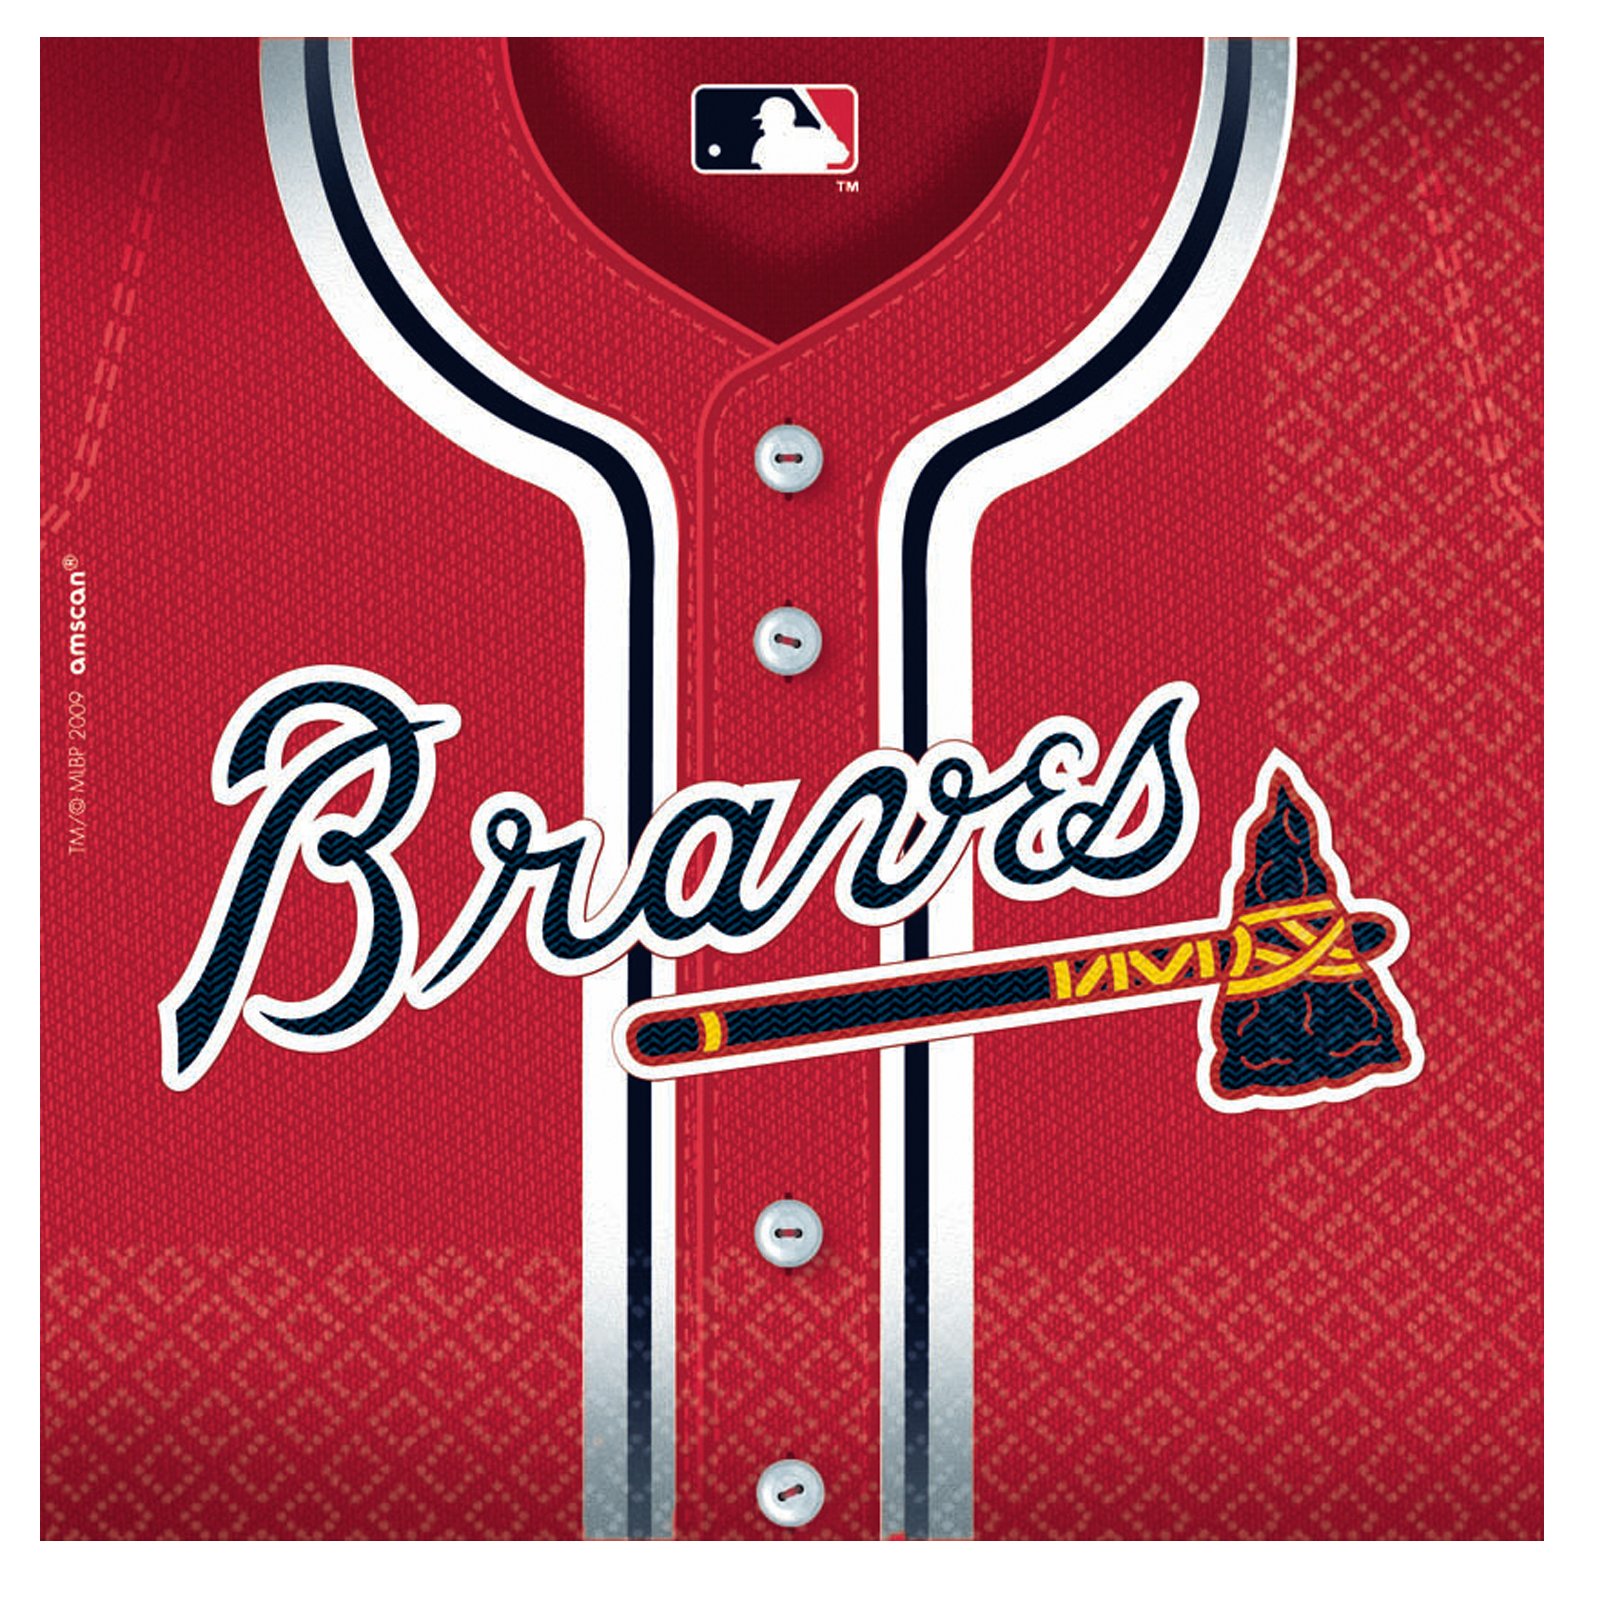 Atlanta Braves Baseball - Lunch Napkins (36 count)